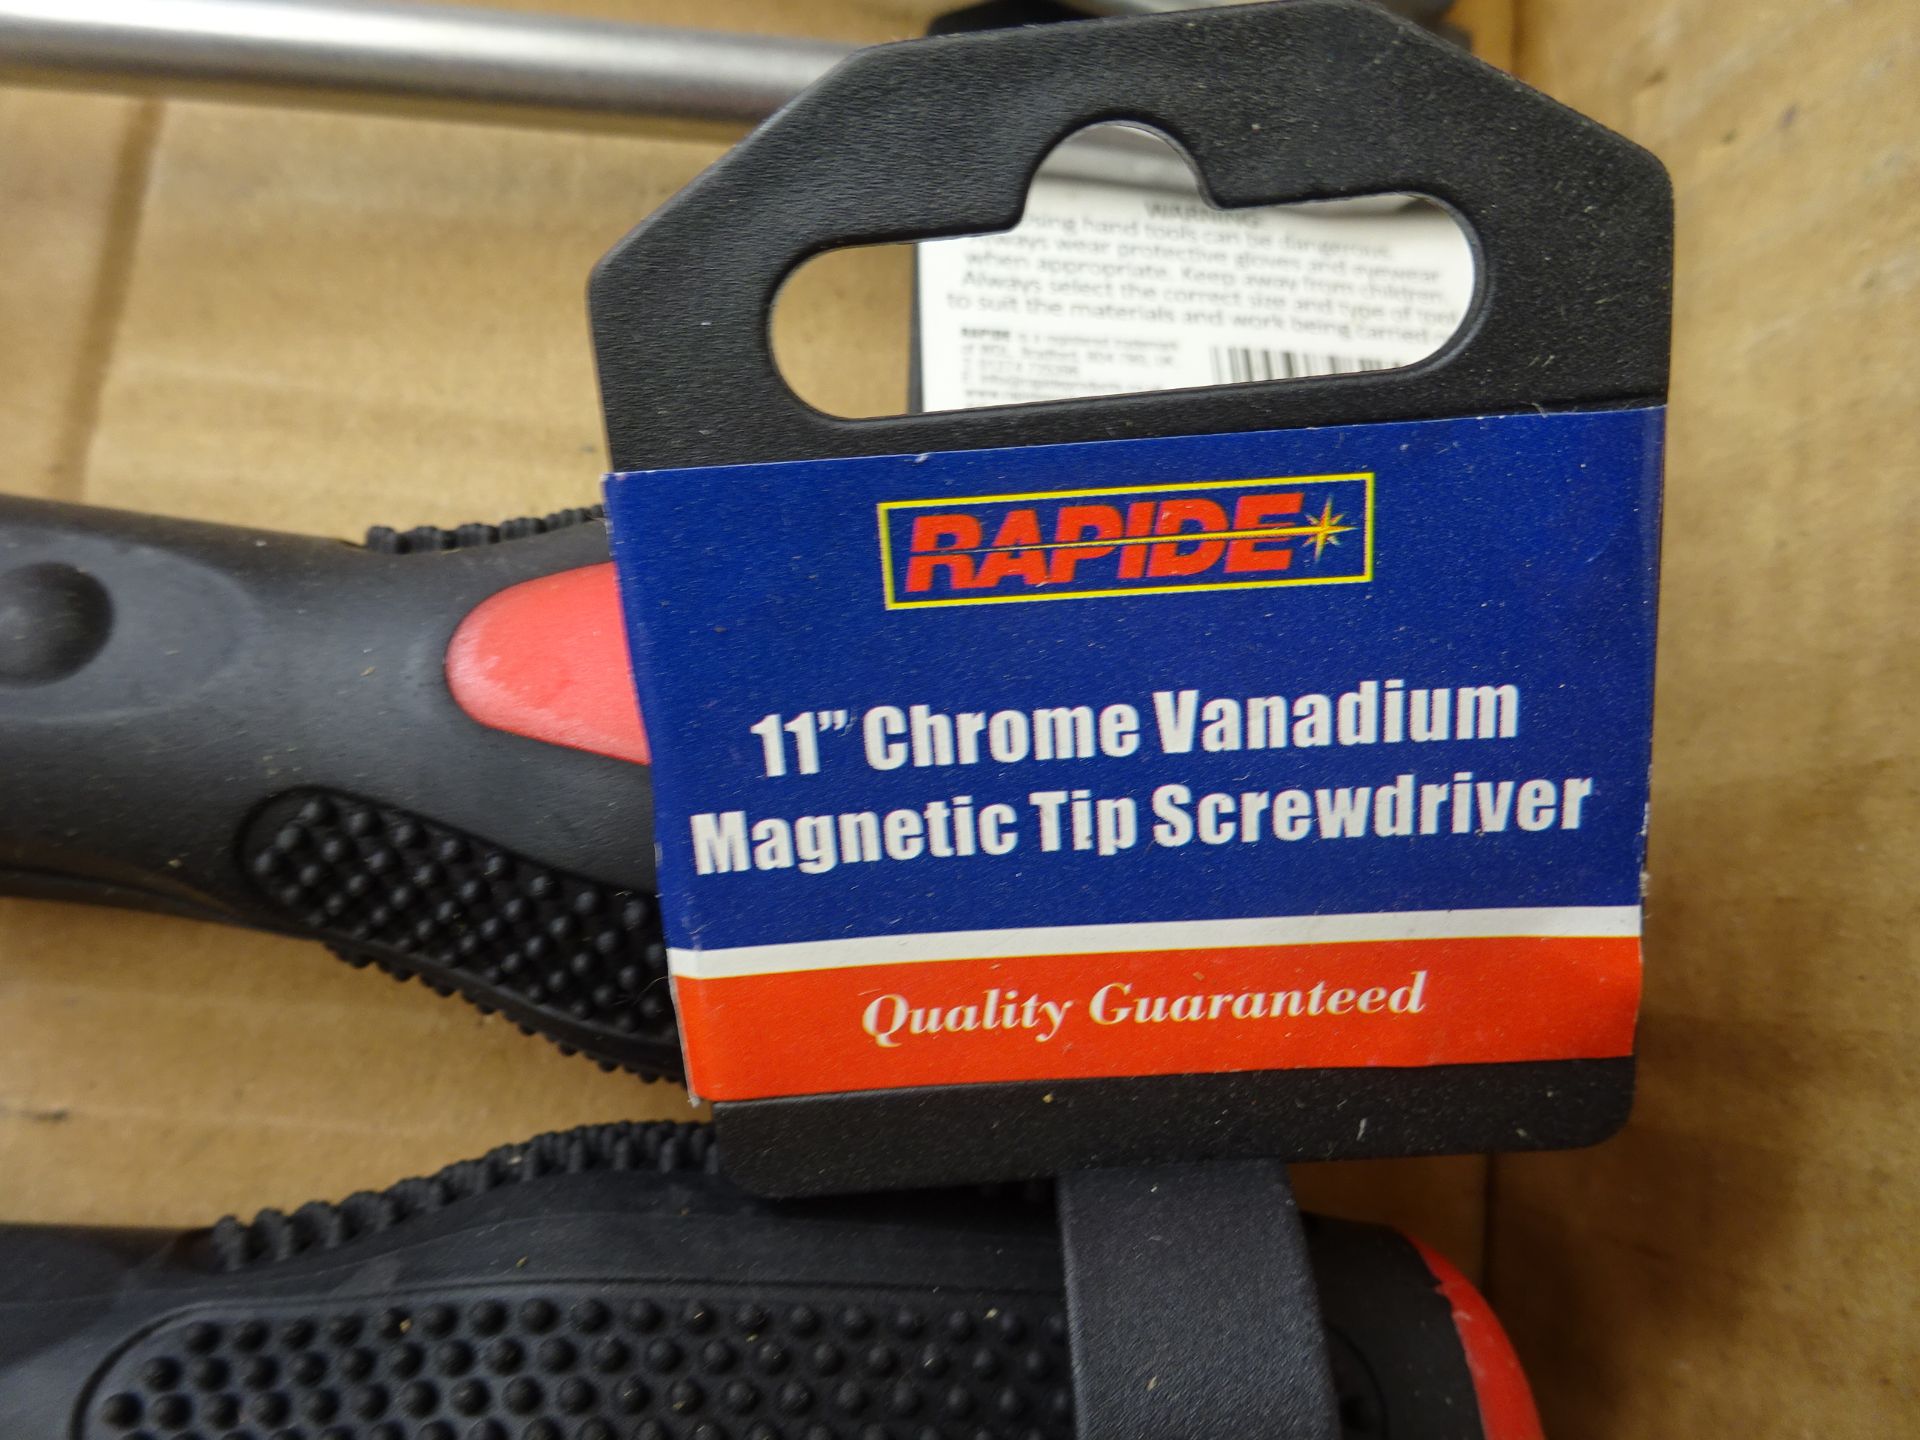 Box of 5 Flat Head Rapide 11" Chrome Vanadium Magnetic Tip Screwdriver - Image 2 of 2